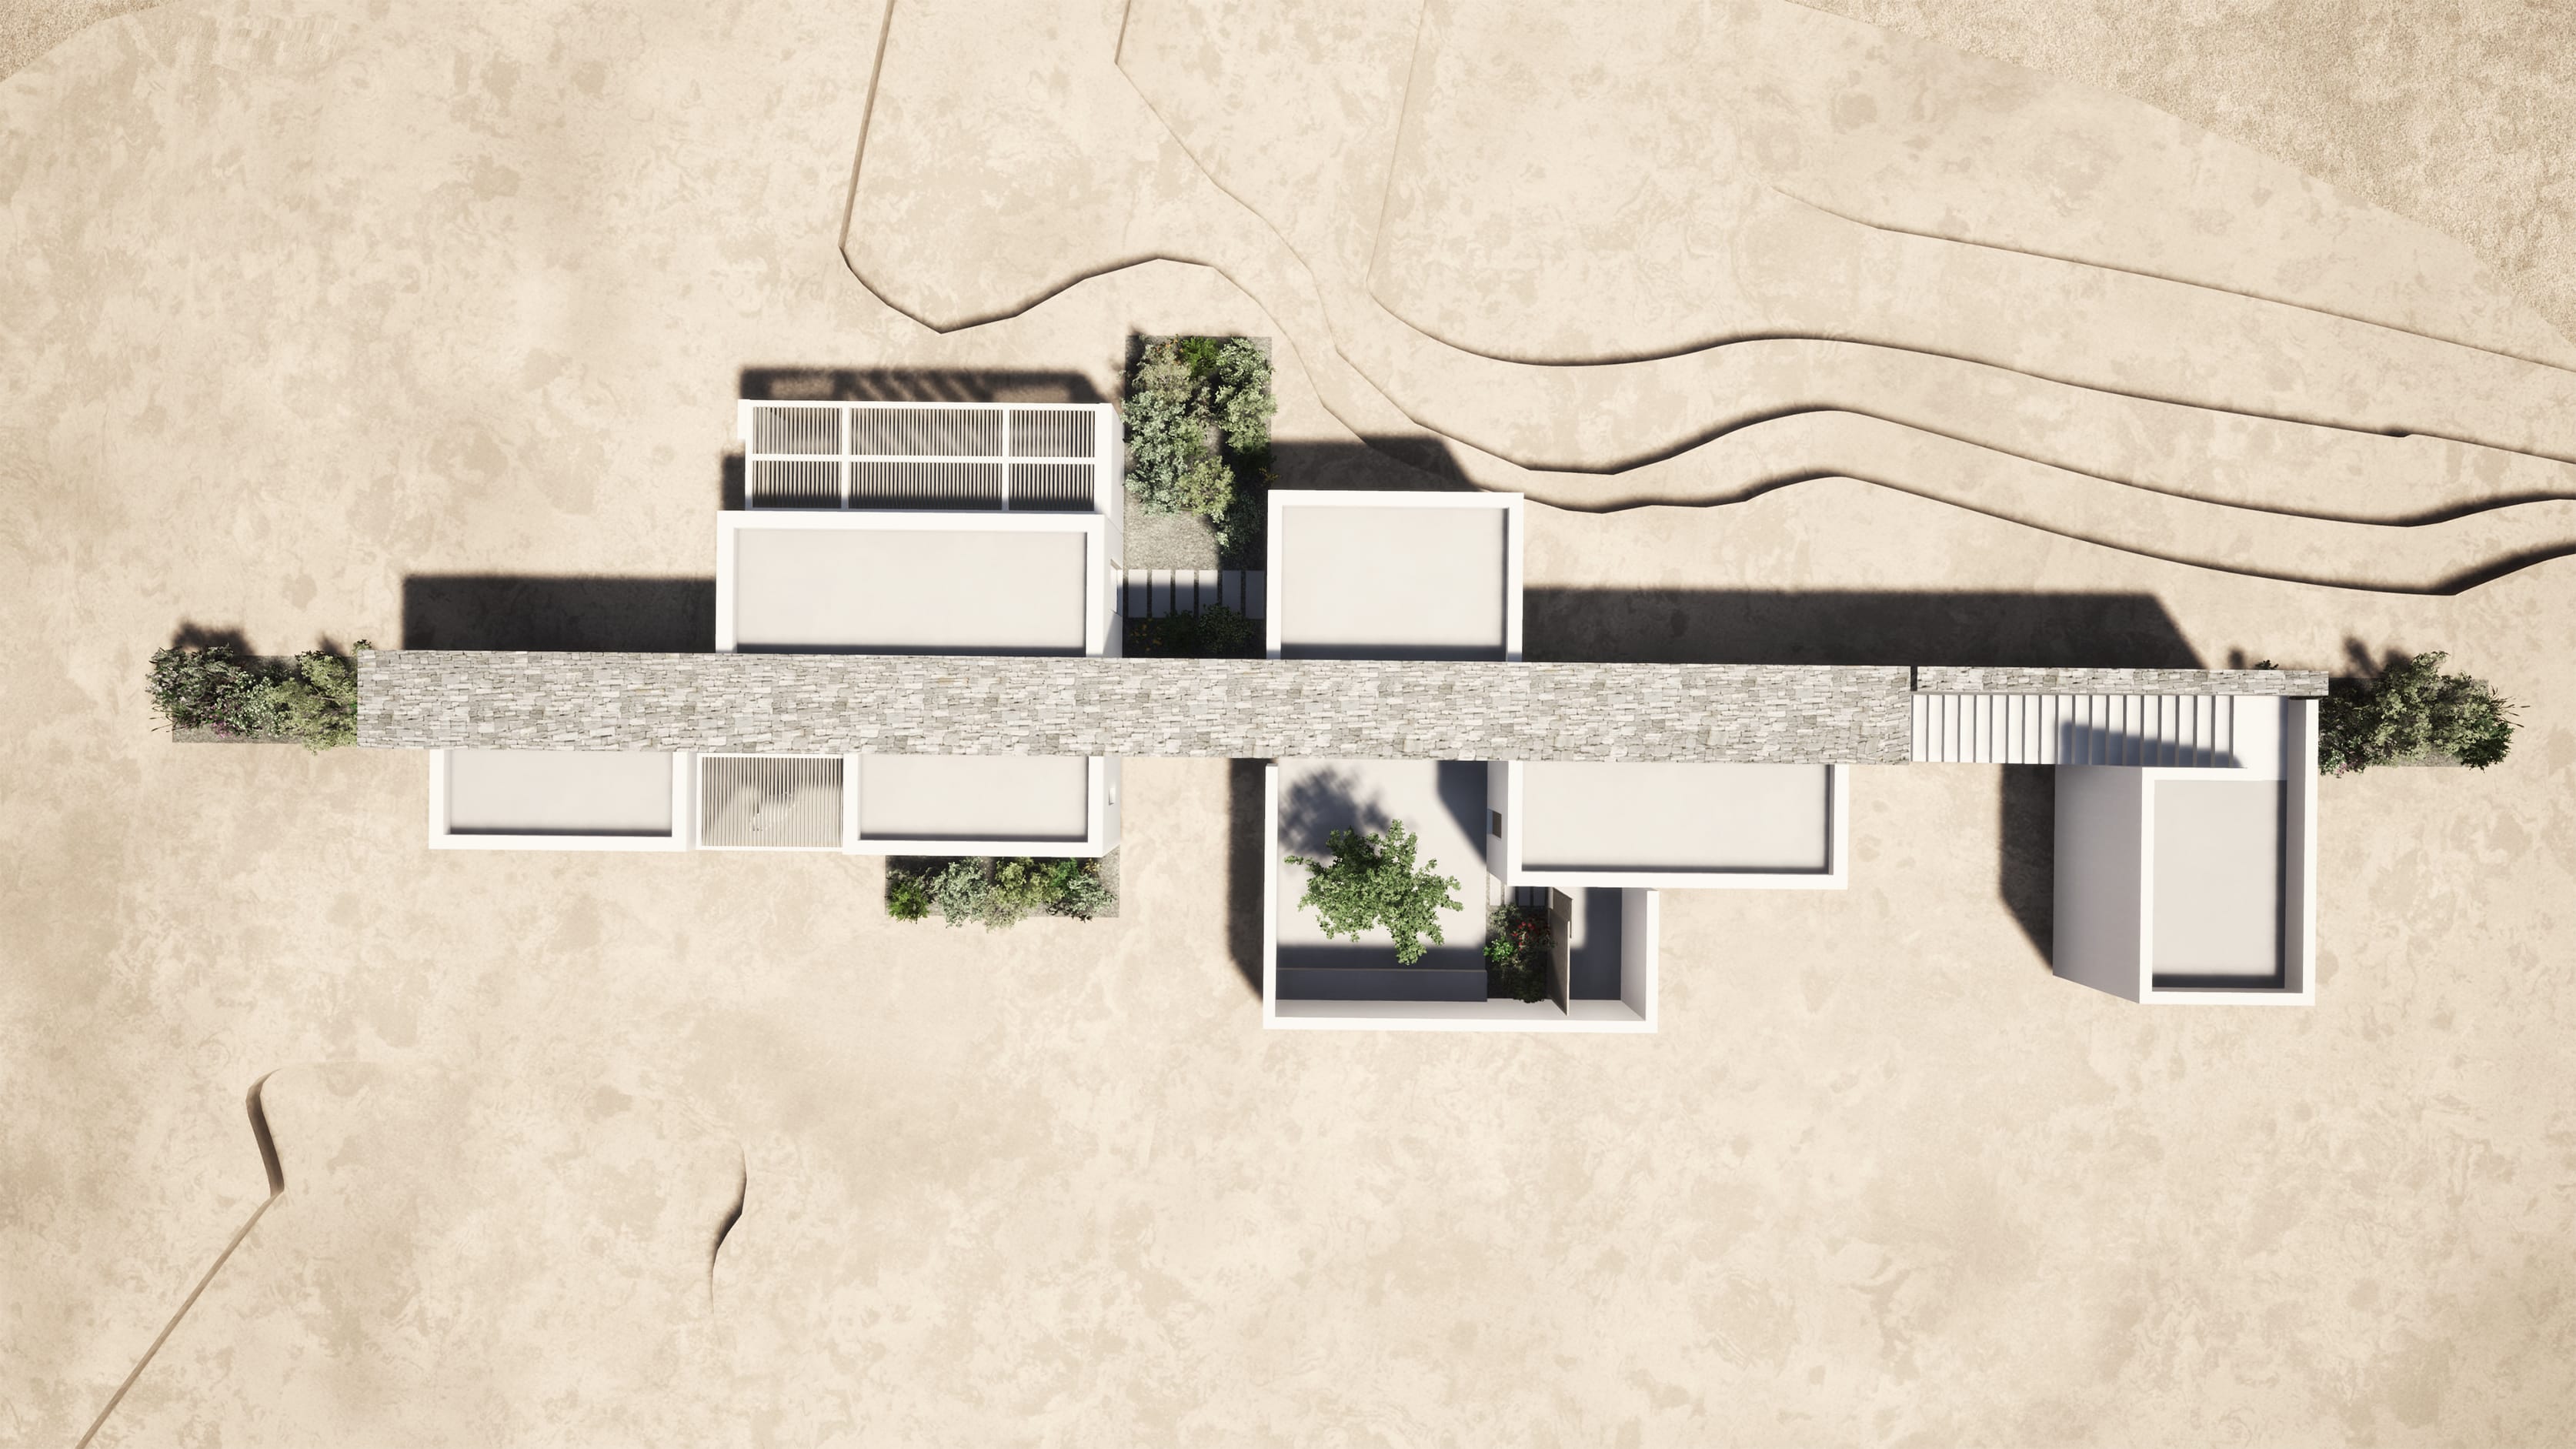 Evripiotis Architects--Line House, Paros Island